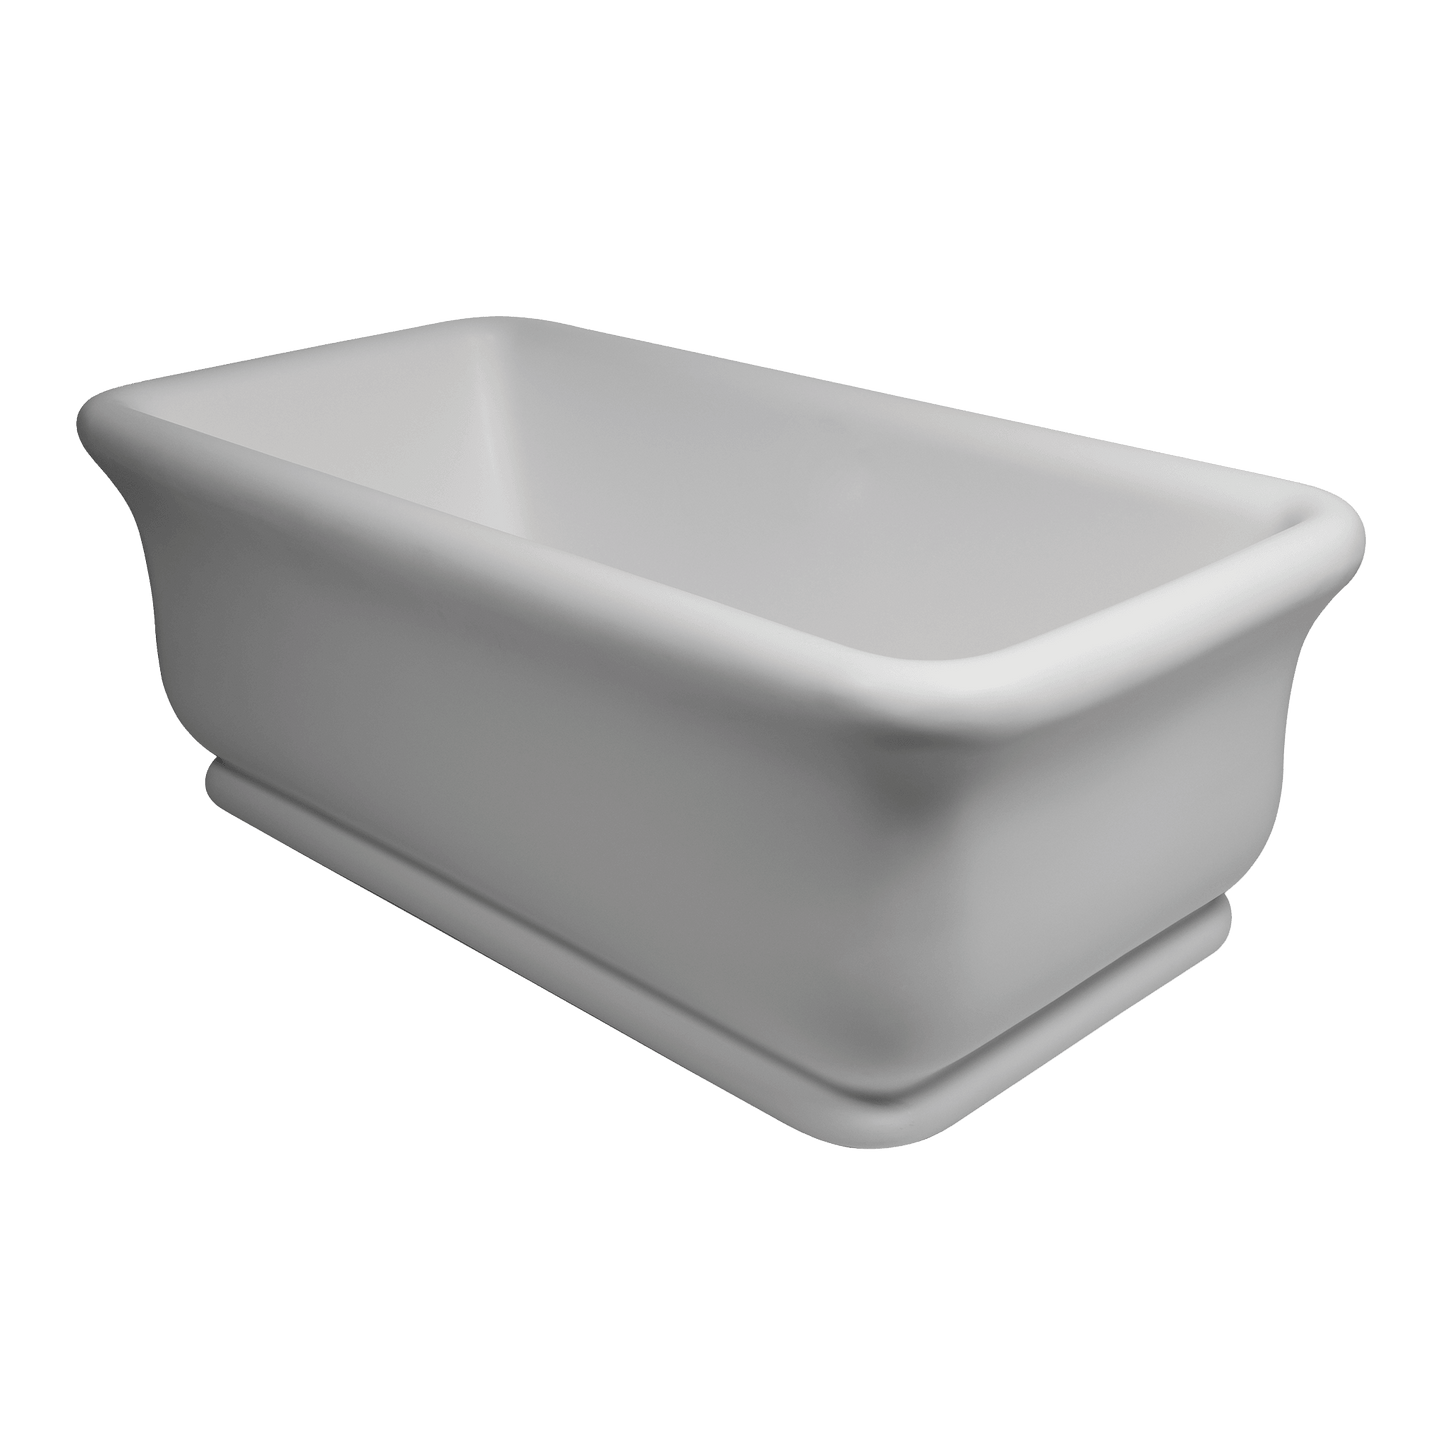 Freestanding Fireclay Style Roll-top Bath - Bilden Home & Hardware Market